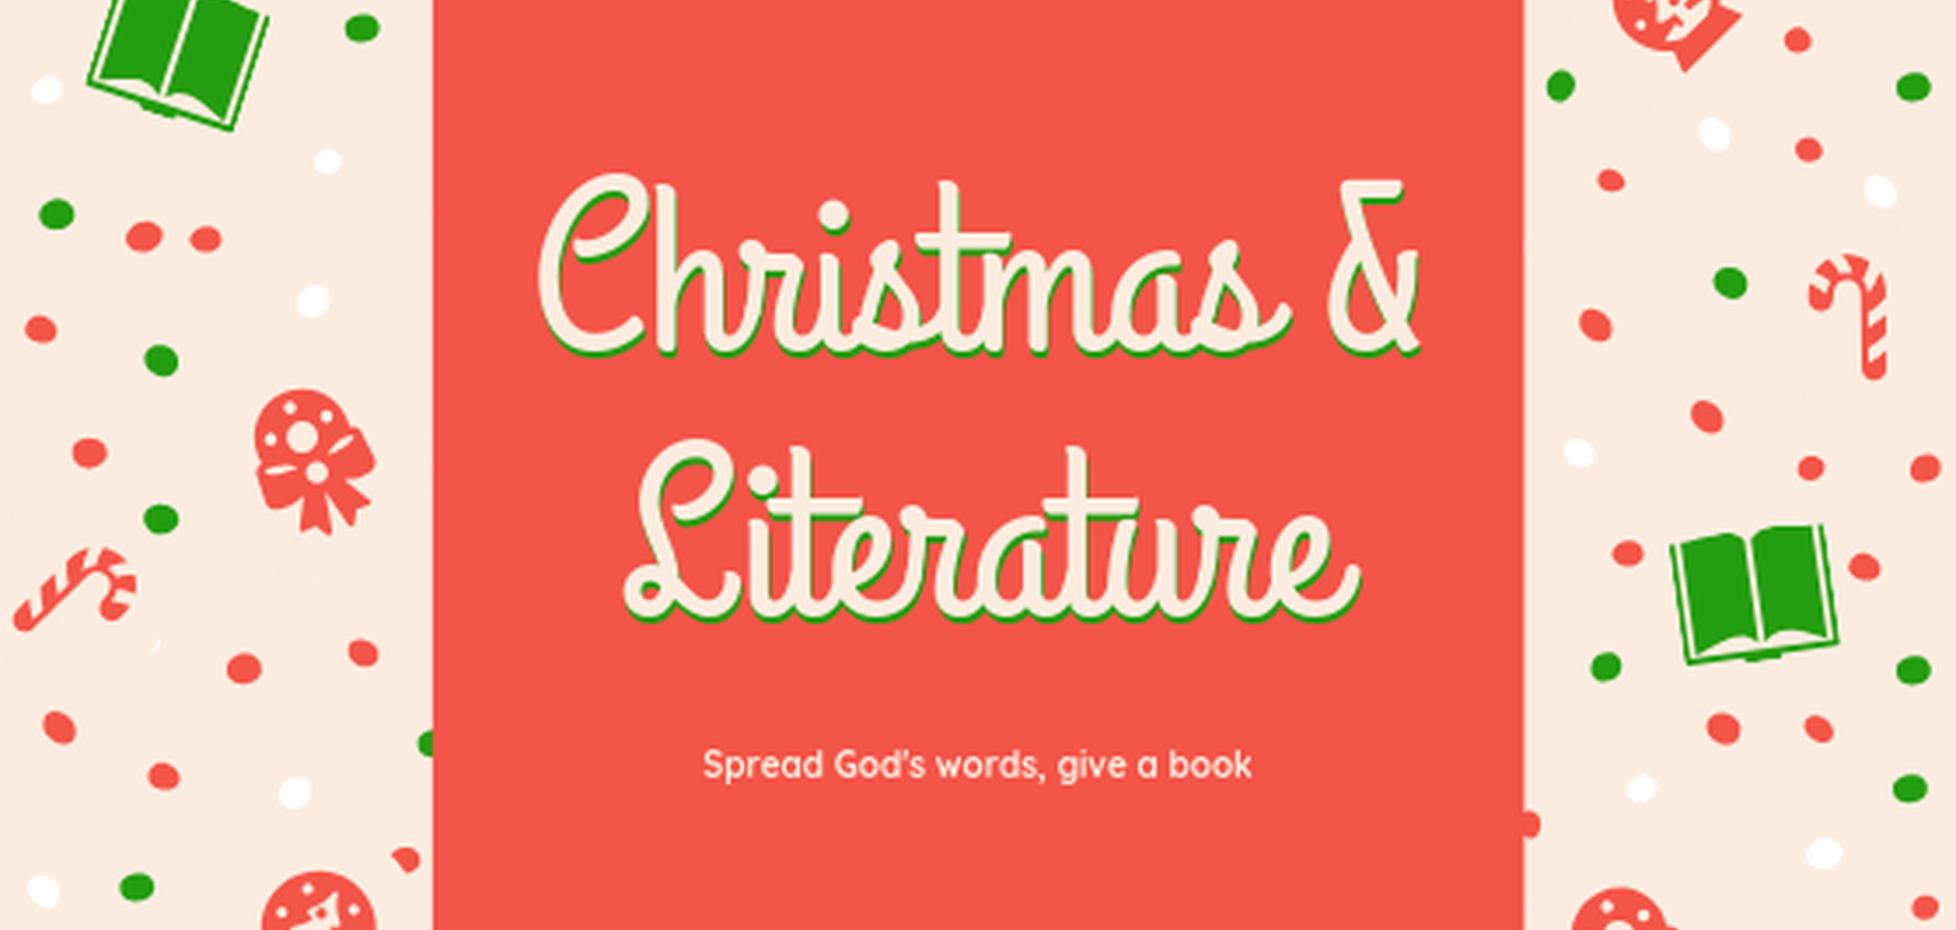 Using Christian Literature at Christmas